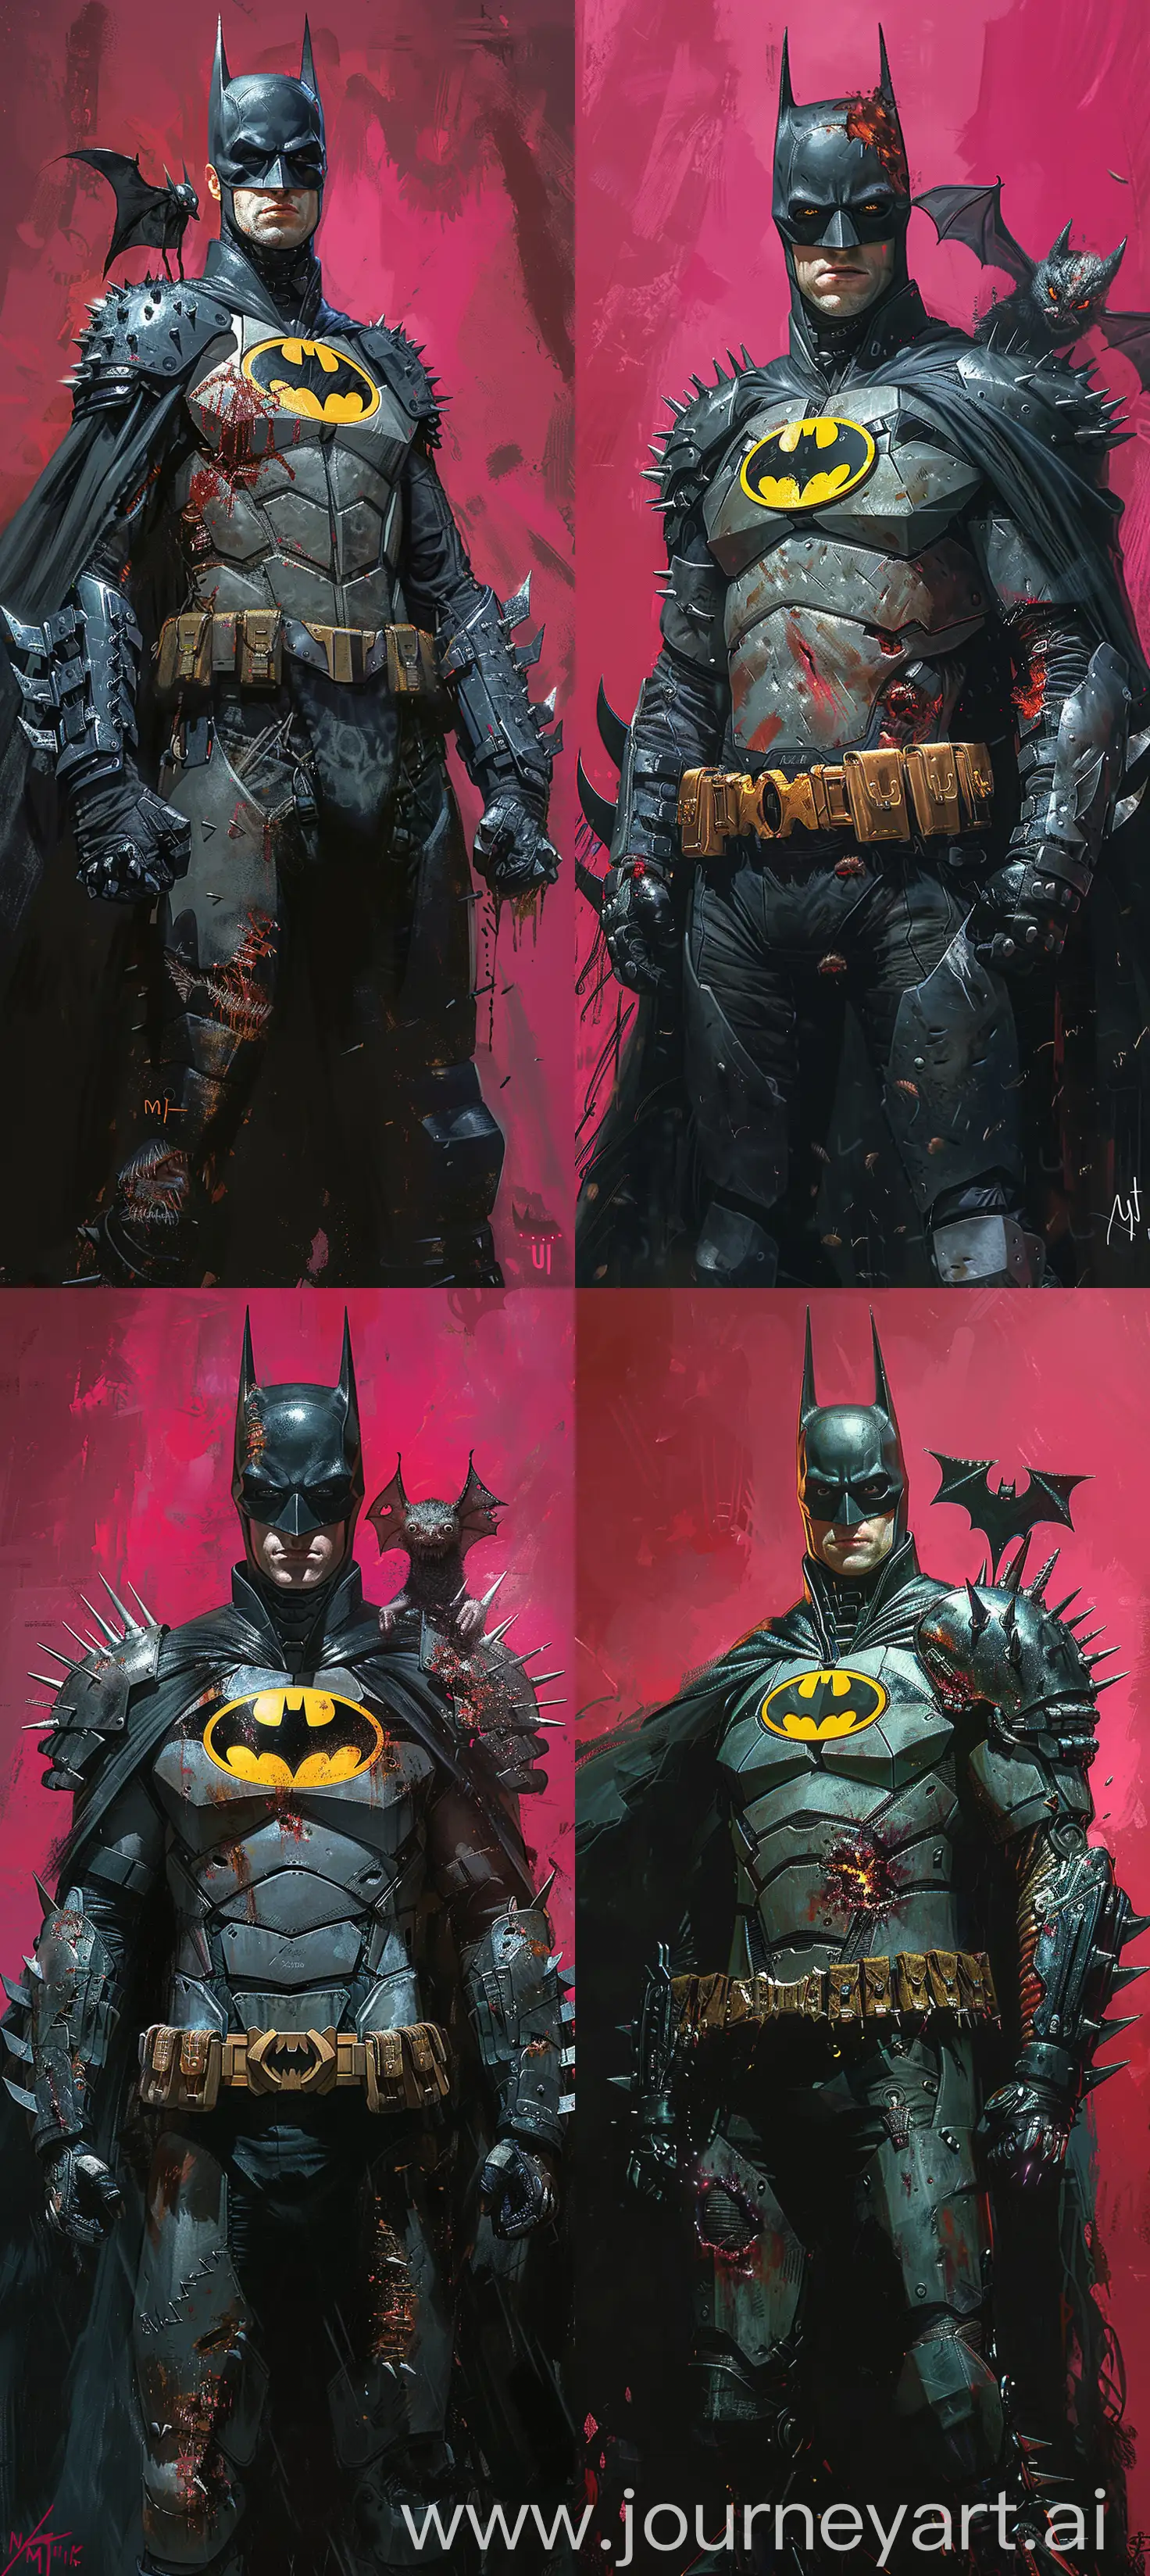 Menacing-Armored-Batman-with-Spikes-and-Eerie-Bat-Creature-in-Dark-Aesthetic